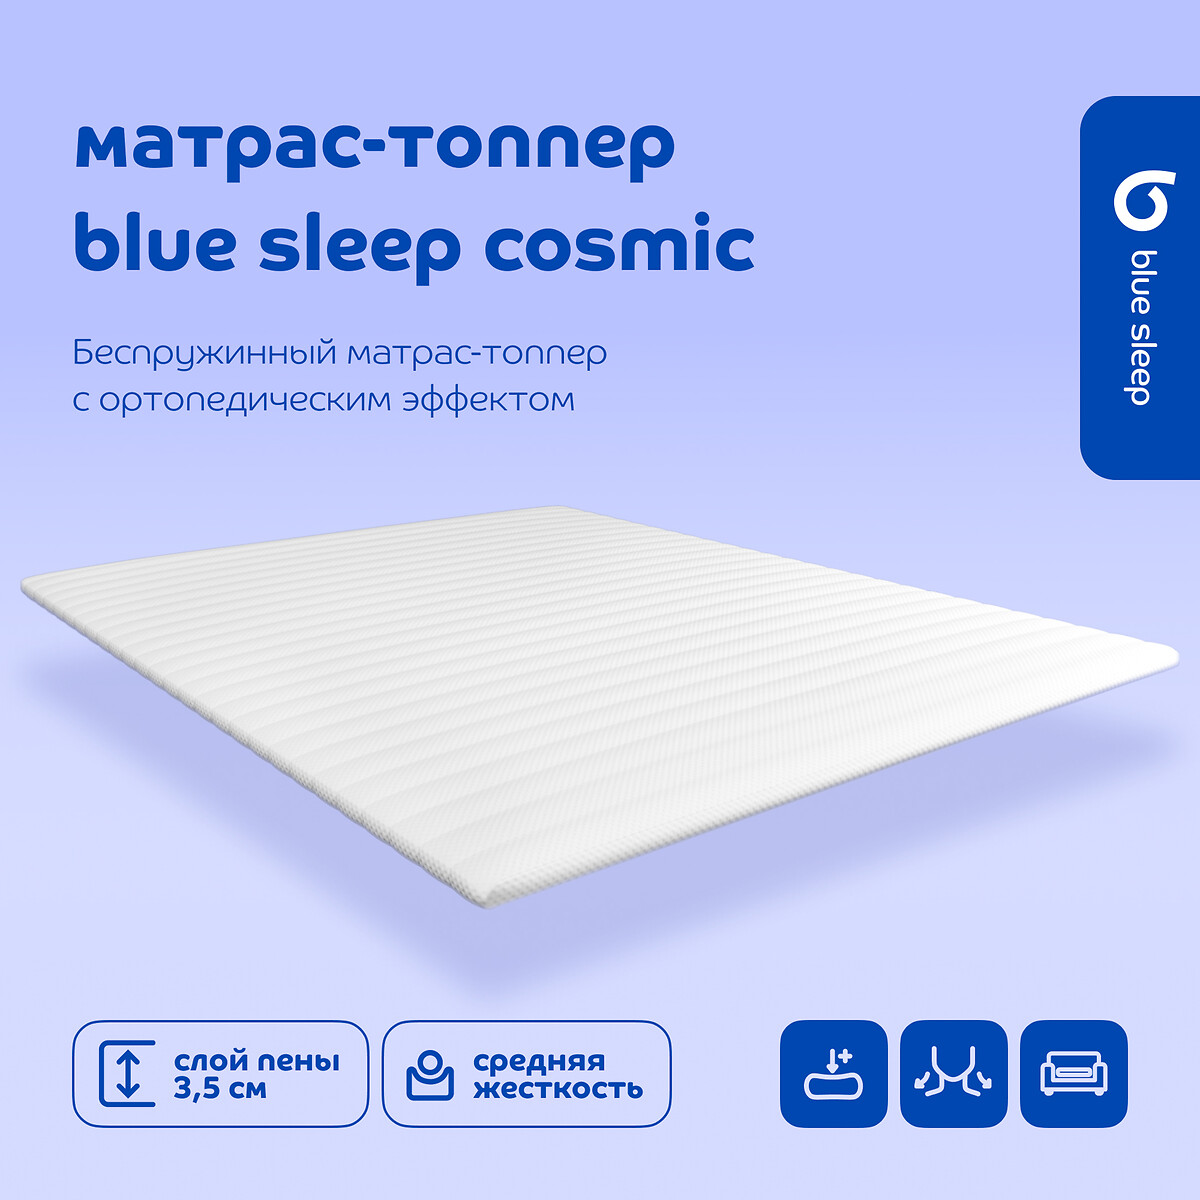 Топпер Blue Sleep Cosmic 120 x 200 cm белый LaRedoute, размер 120 x 200 cm - фото 4